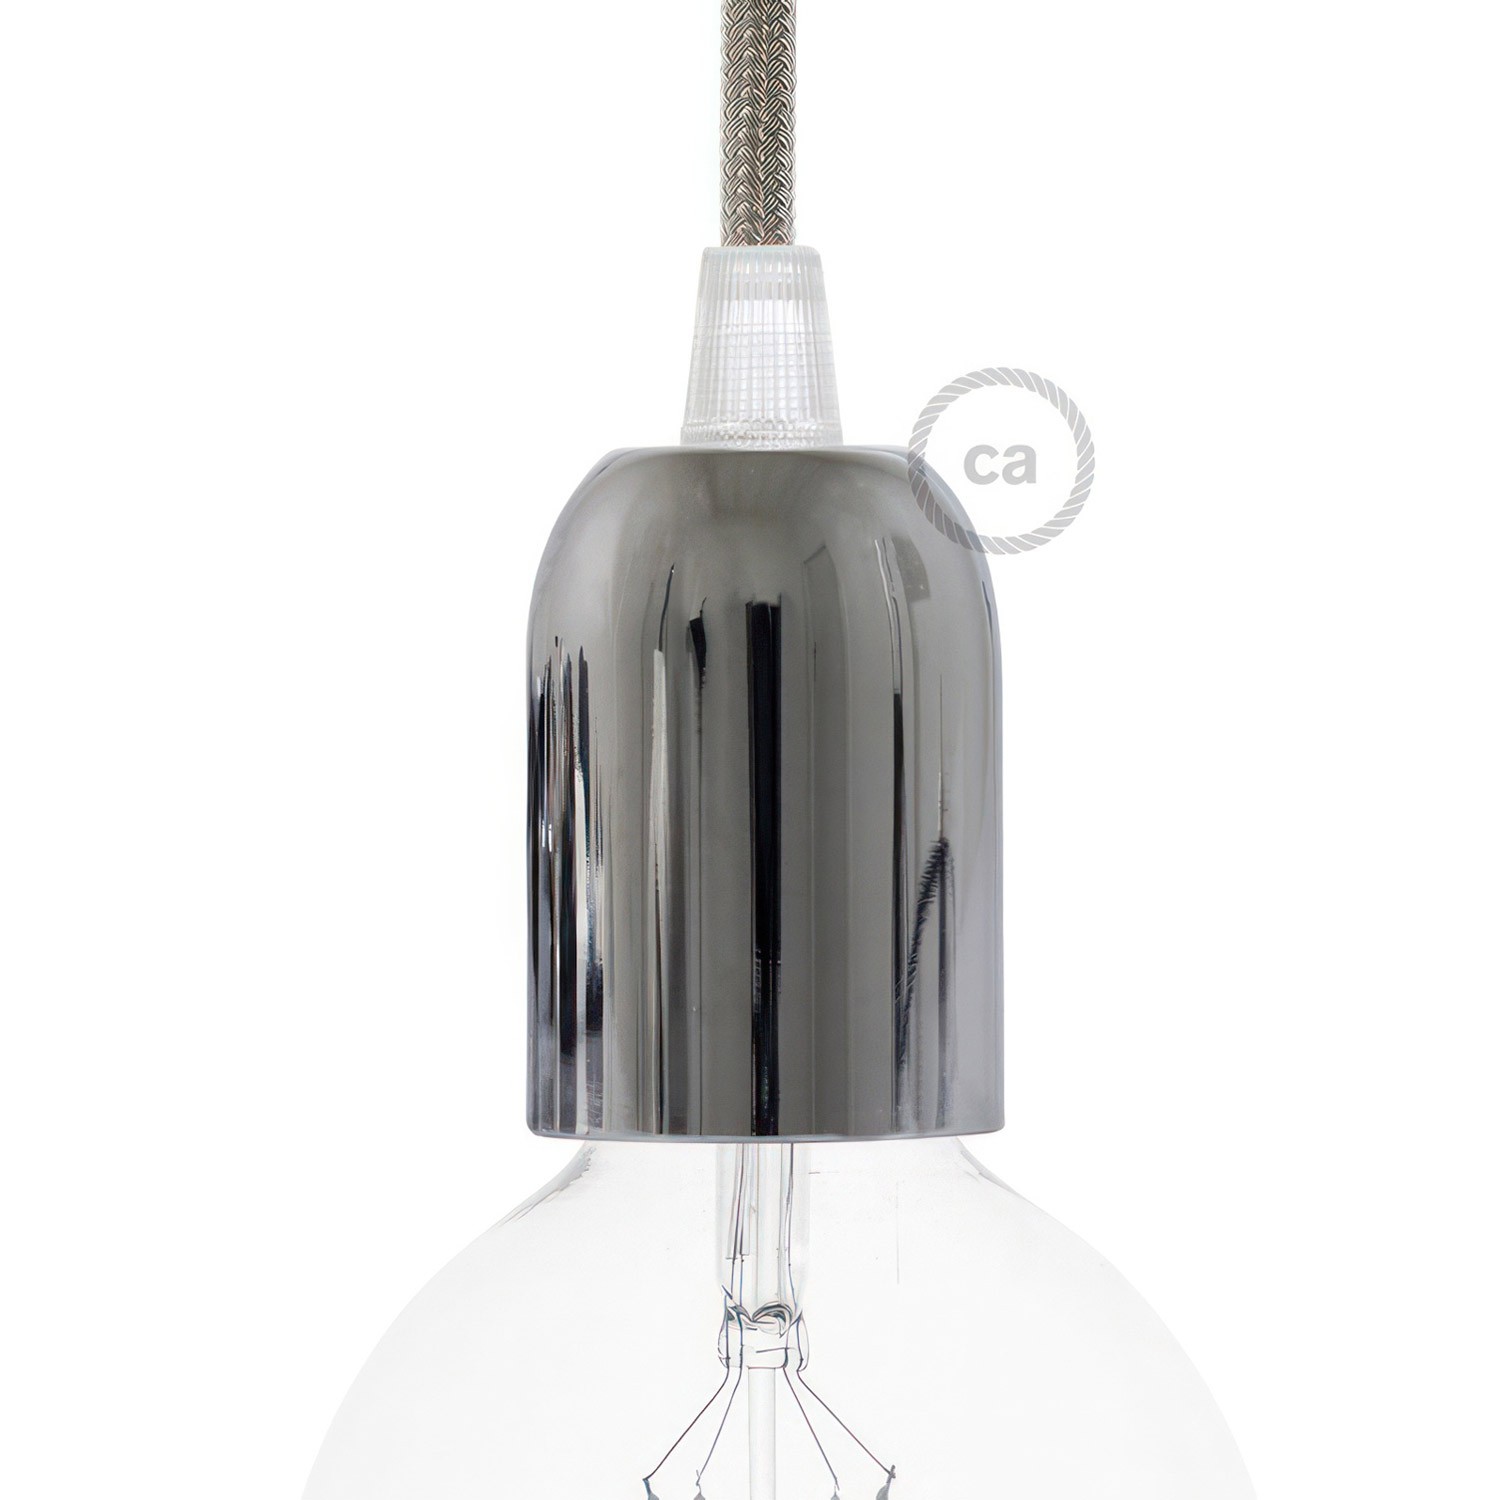 Halbkugelförmiges E27-Lampenfassungs-Kit aus lackiertem Metall